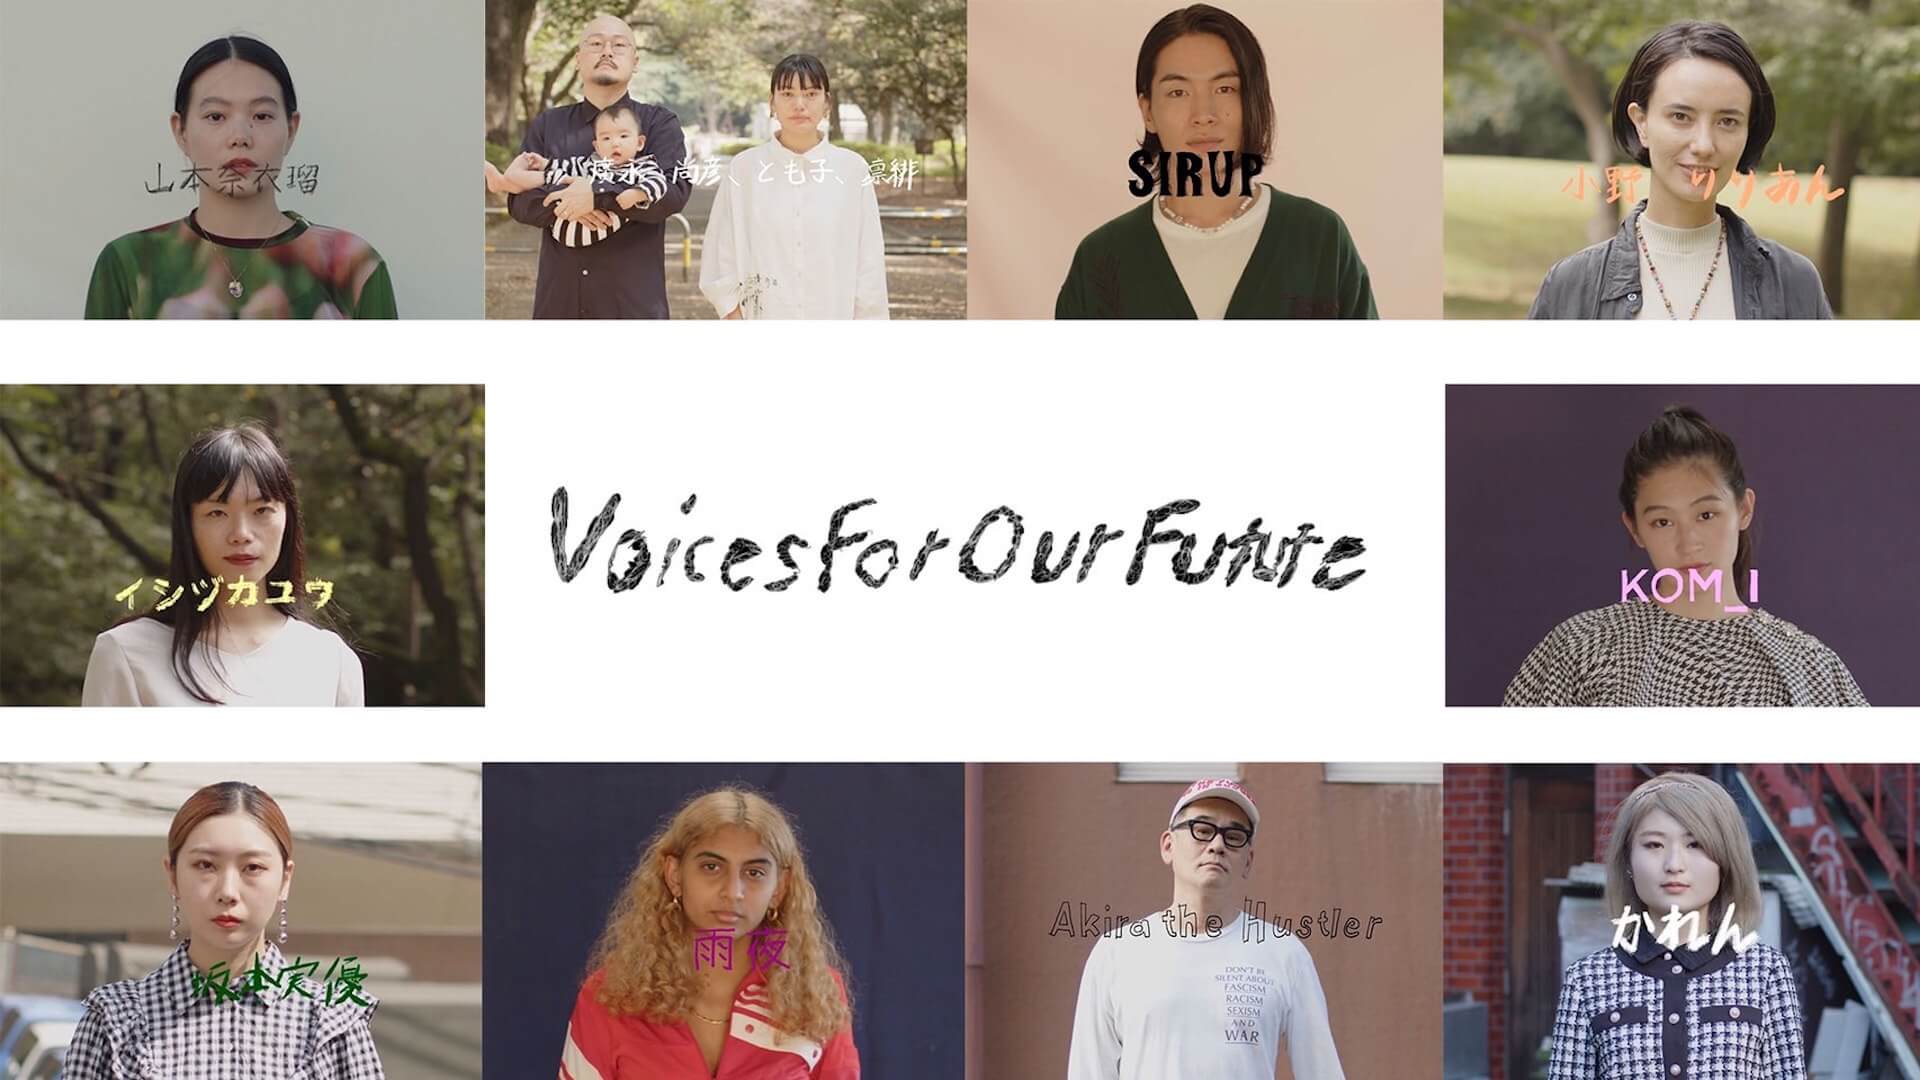 『Voices For Our Future』が公開｜SIRUP、KOM_I、イシヅカユウ、山本奈衣瑠、小野りりあんらが選挙に向けた想いを語る life211028_voicesforourfuture_1